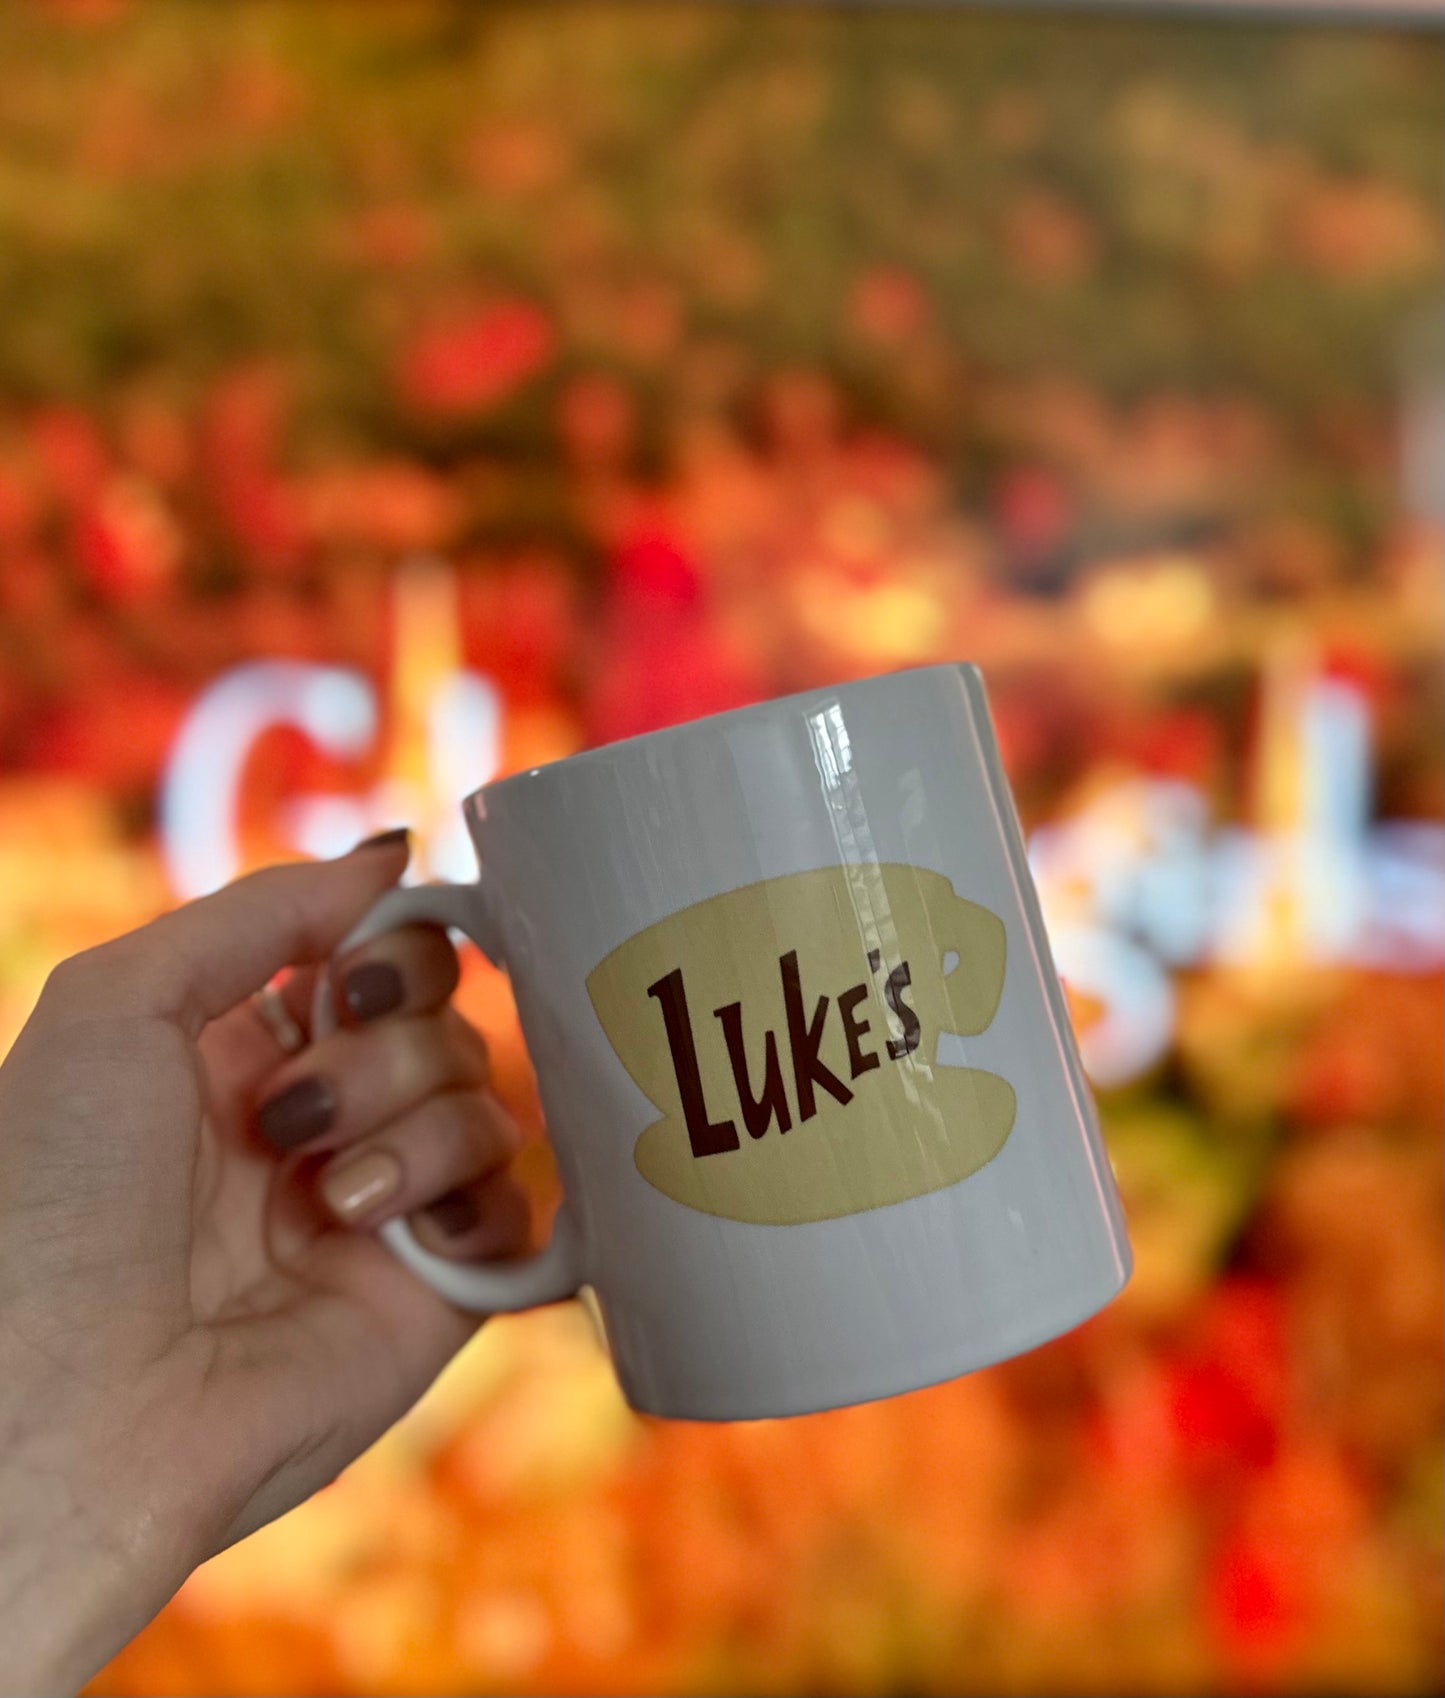 Luke's Mug